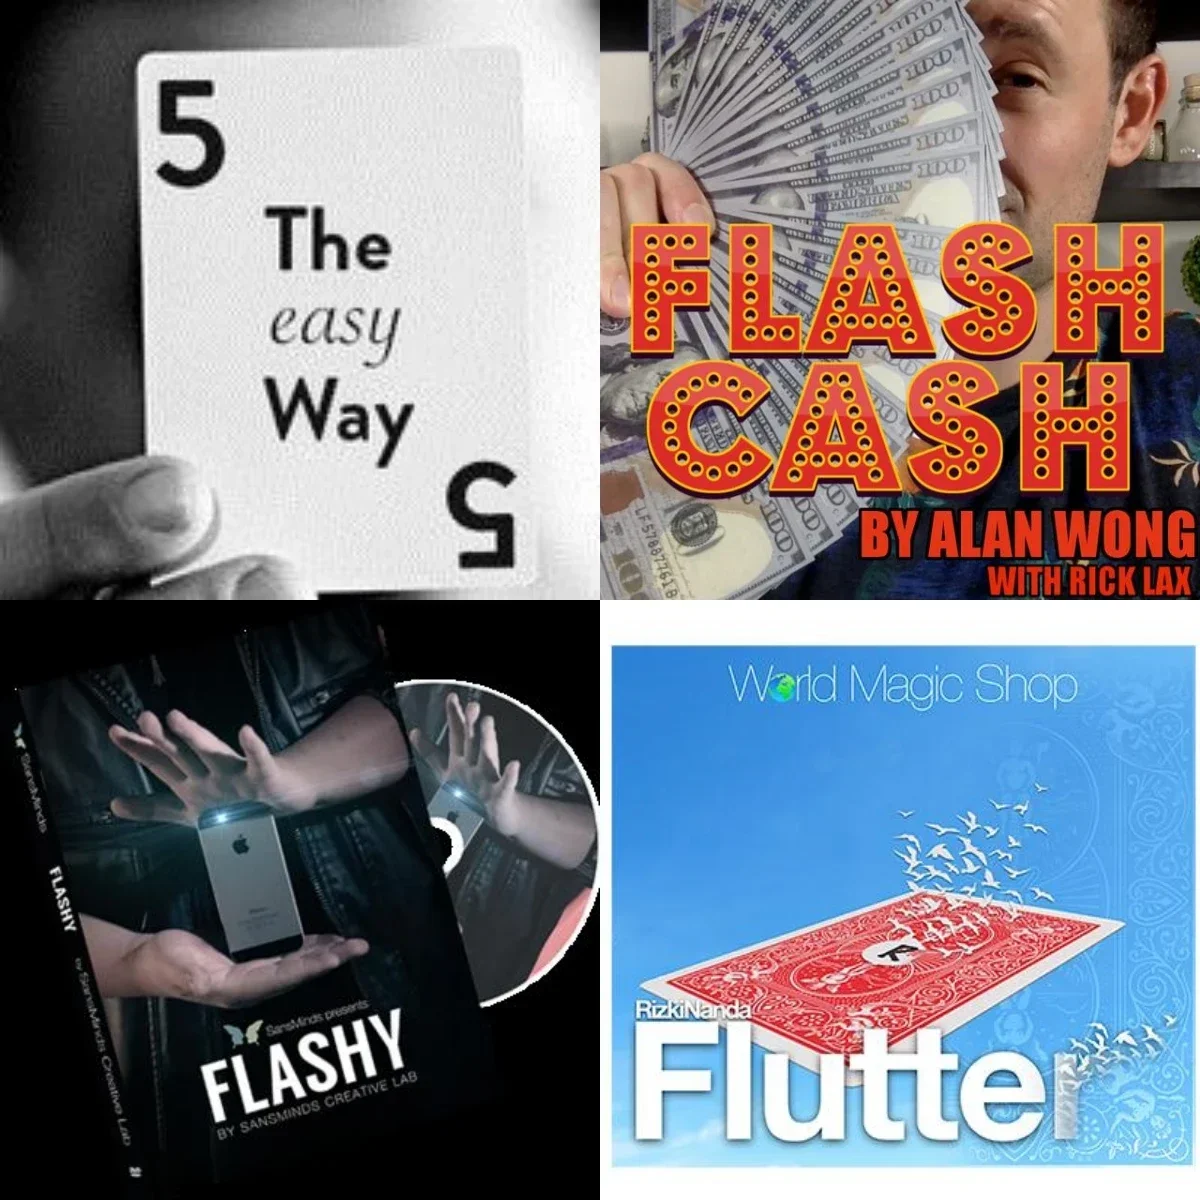 

Five The Easy Way by Mark Elsdon，Flash Cash By Alan Wong，Flashy BY SansMinds Creatrive Lab，Flutter Rizki Nanda-magic tricks